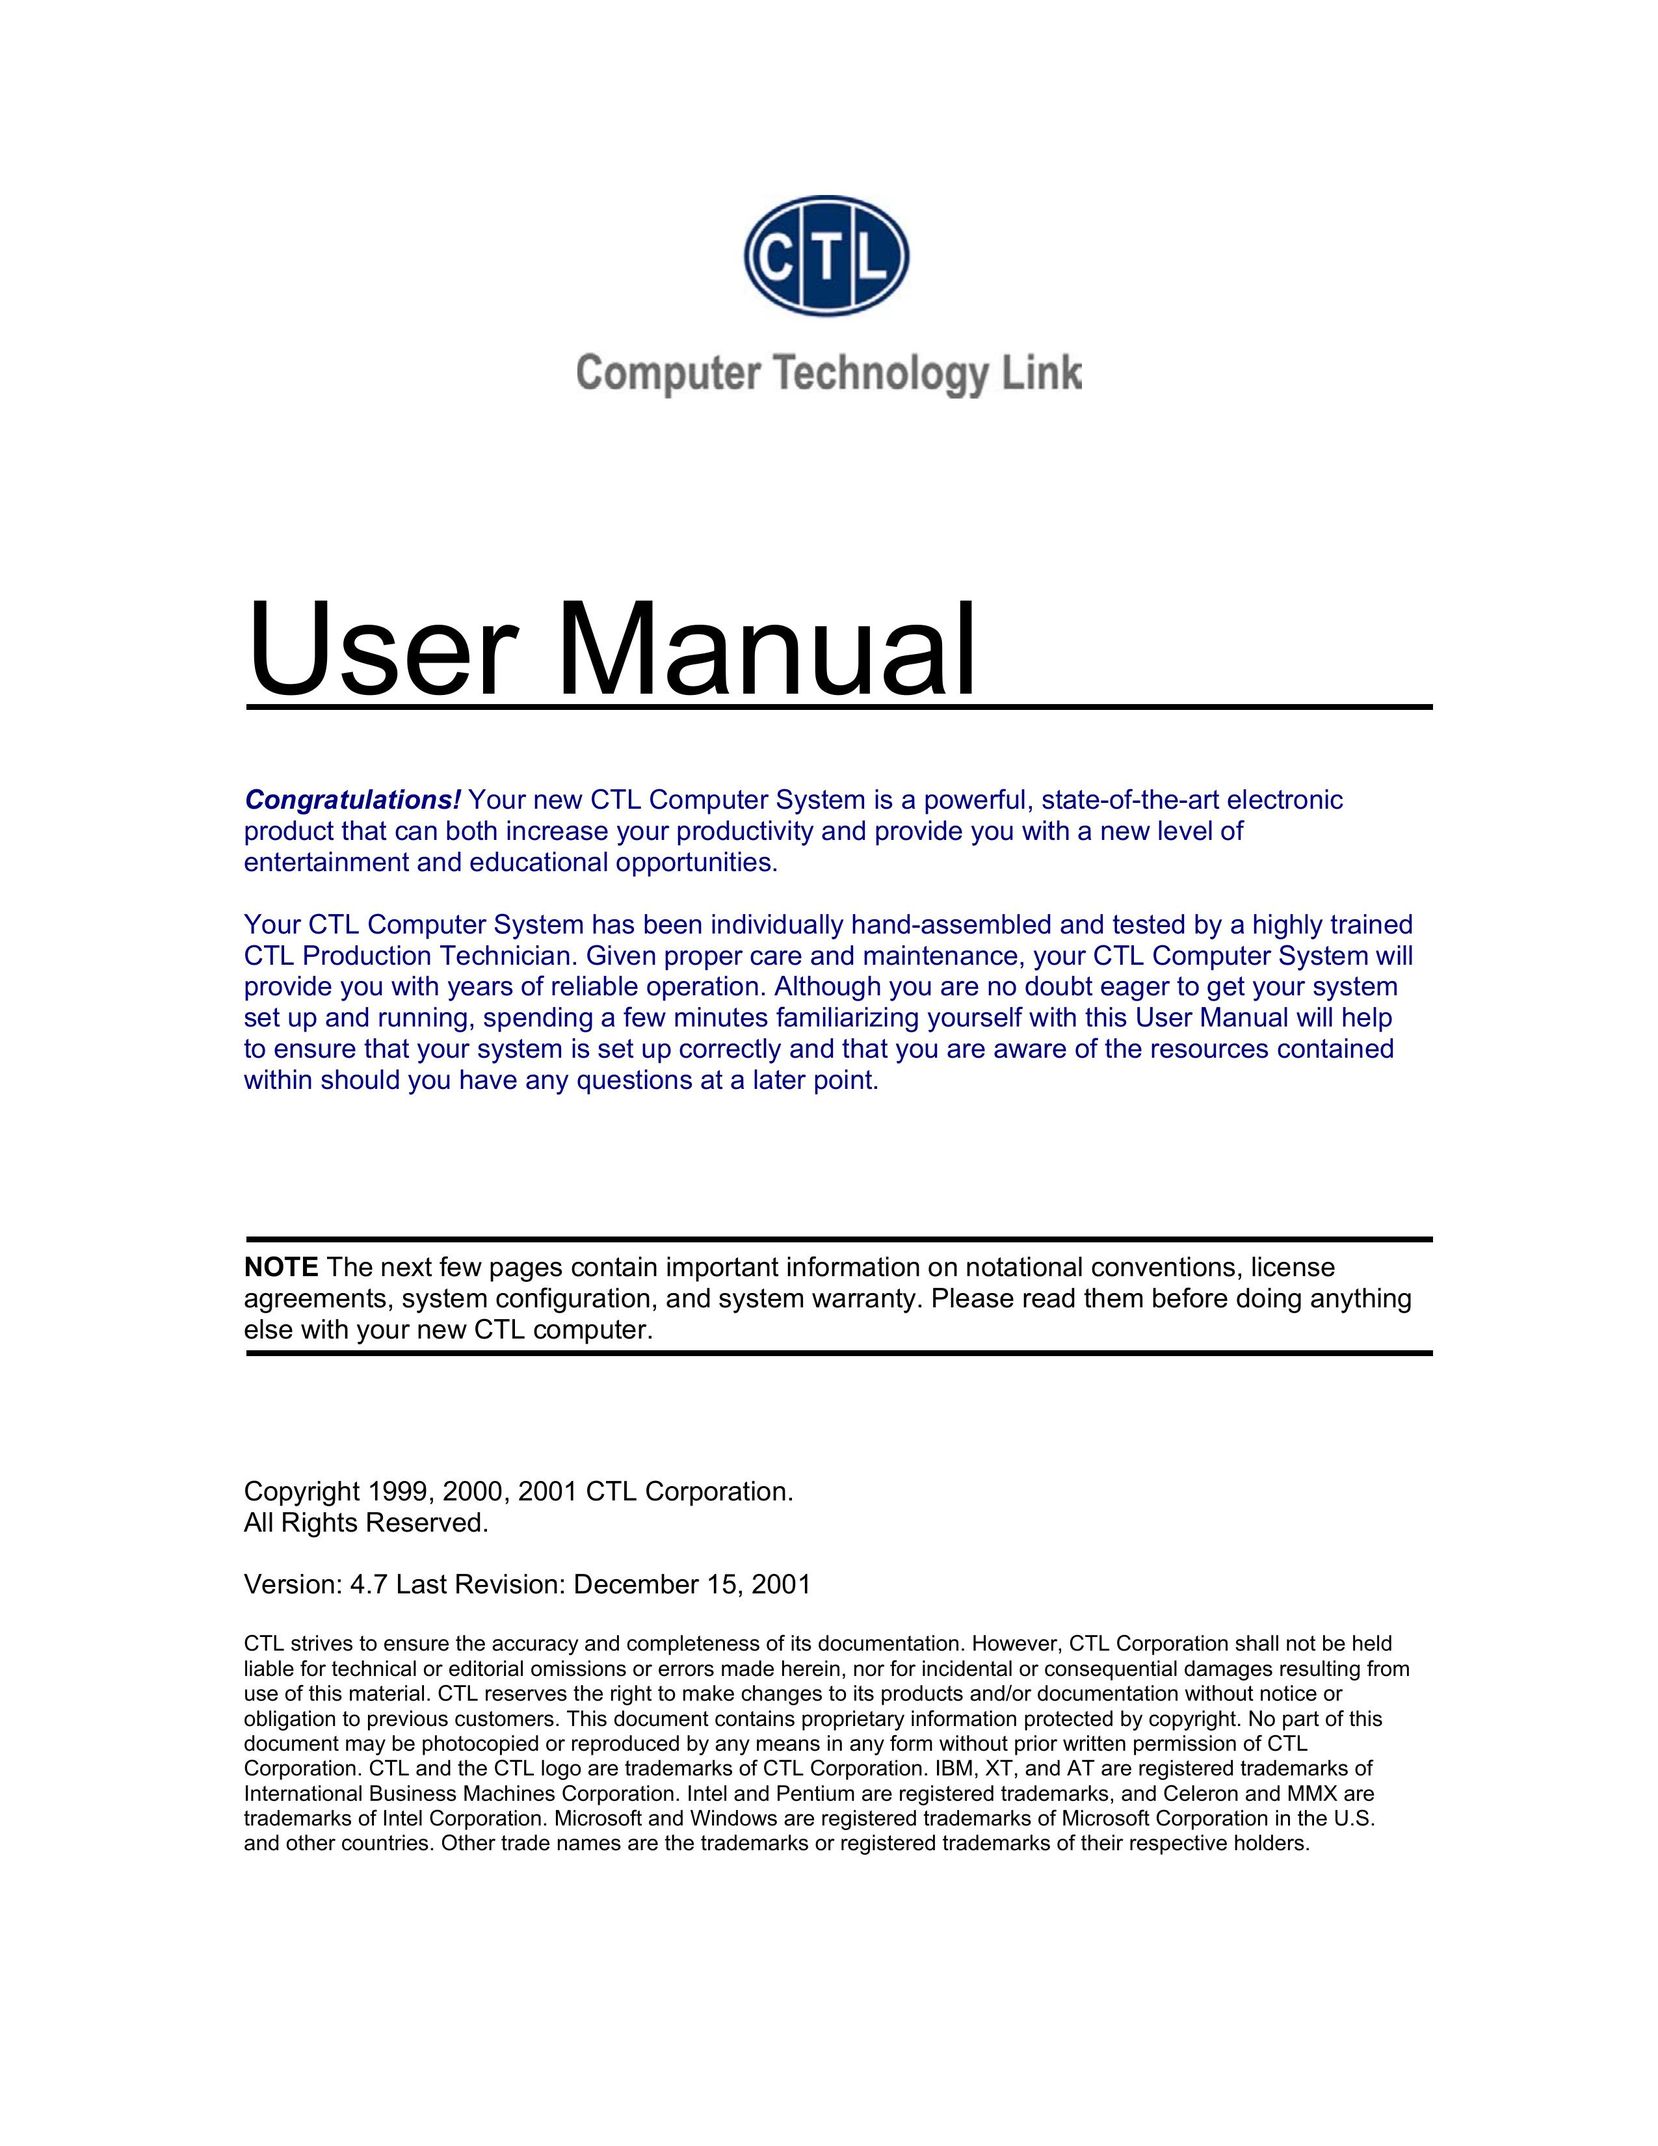 Computer Tech Link Vista Personal Computer User Manual